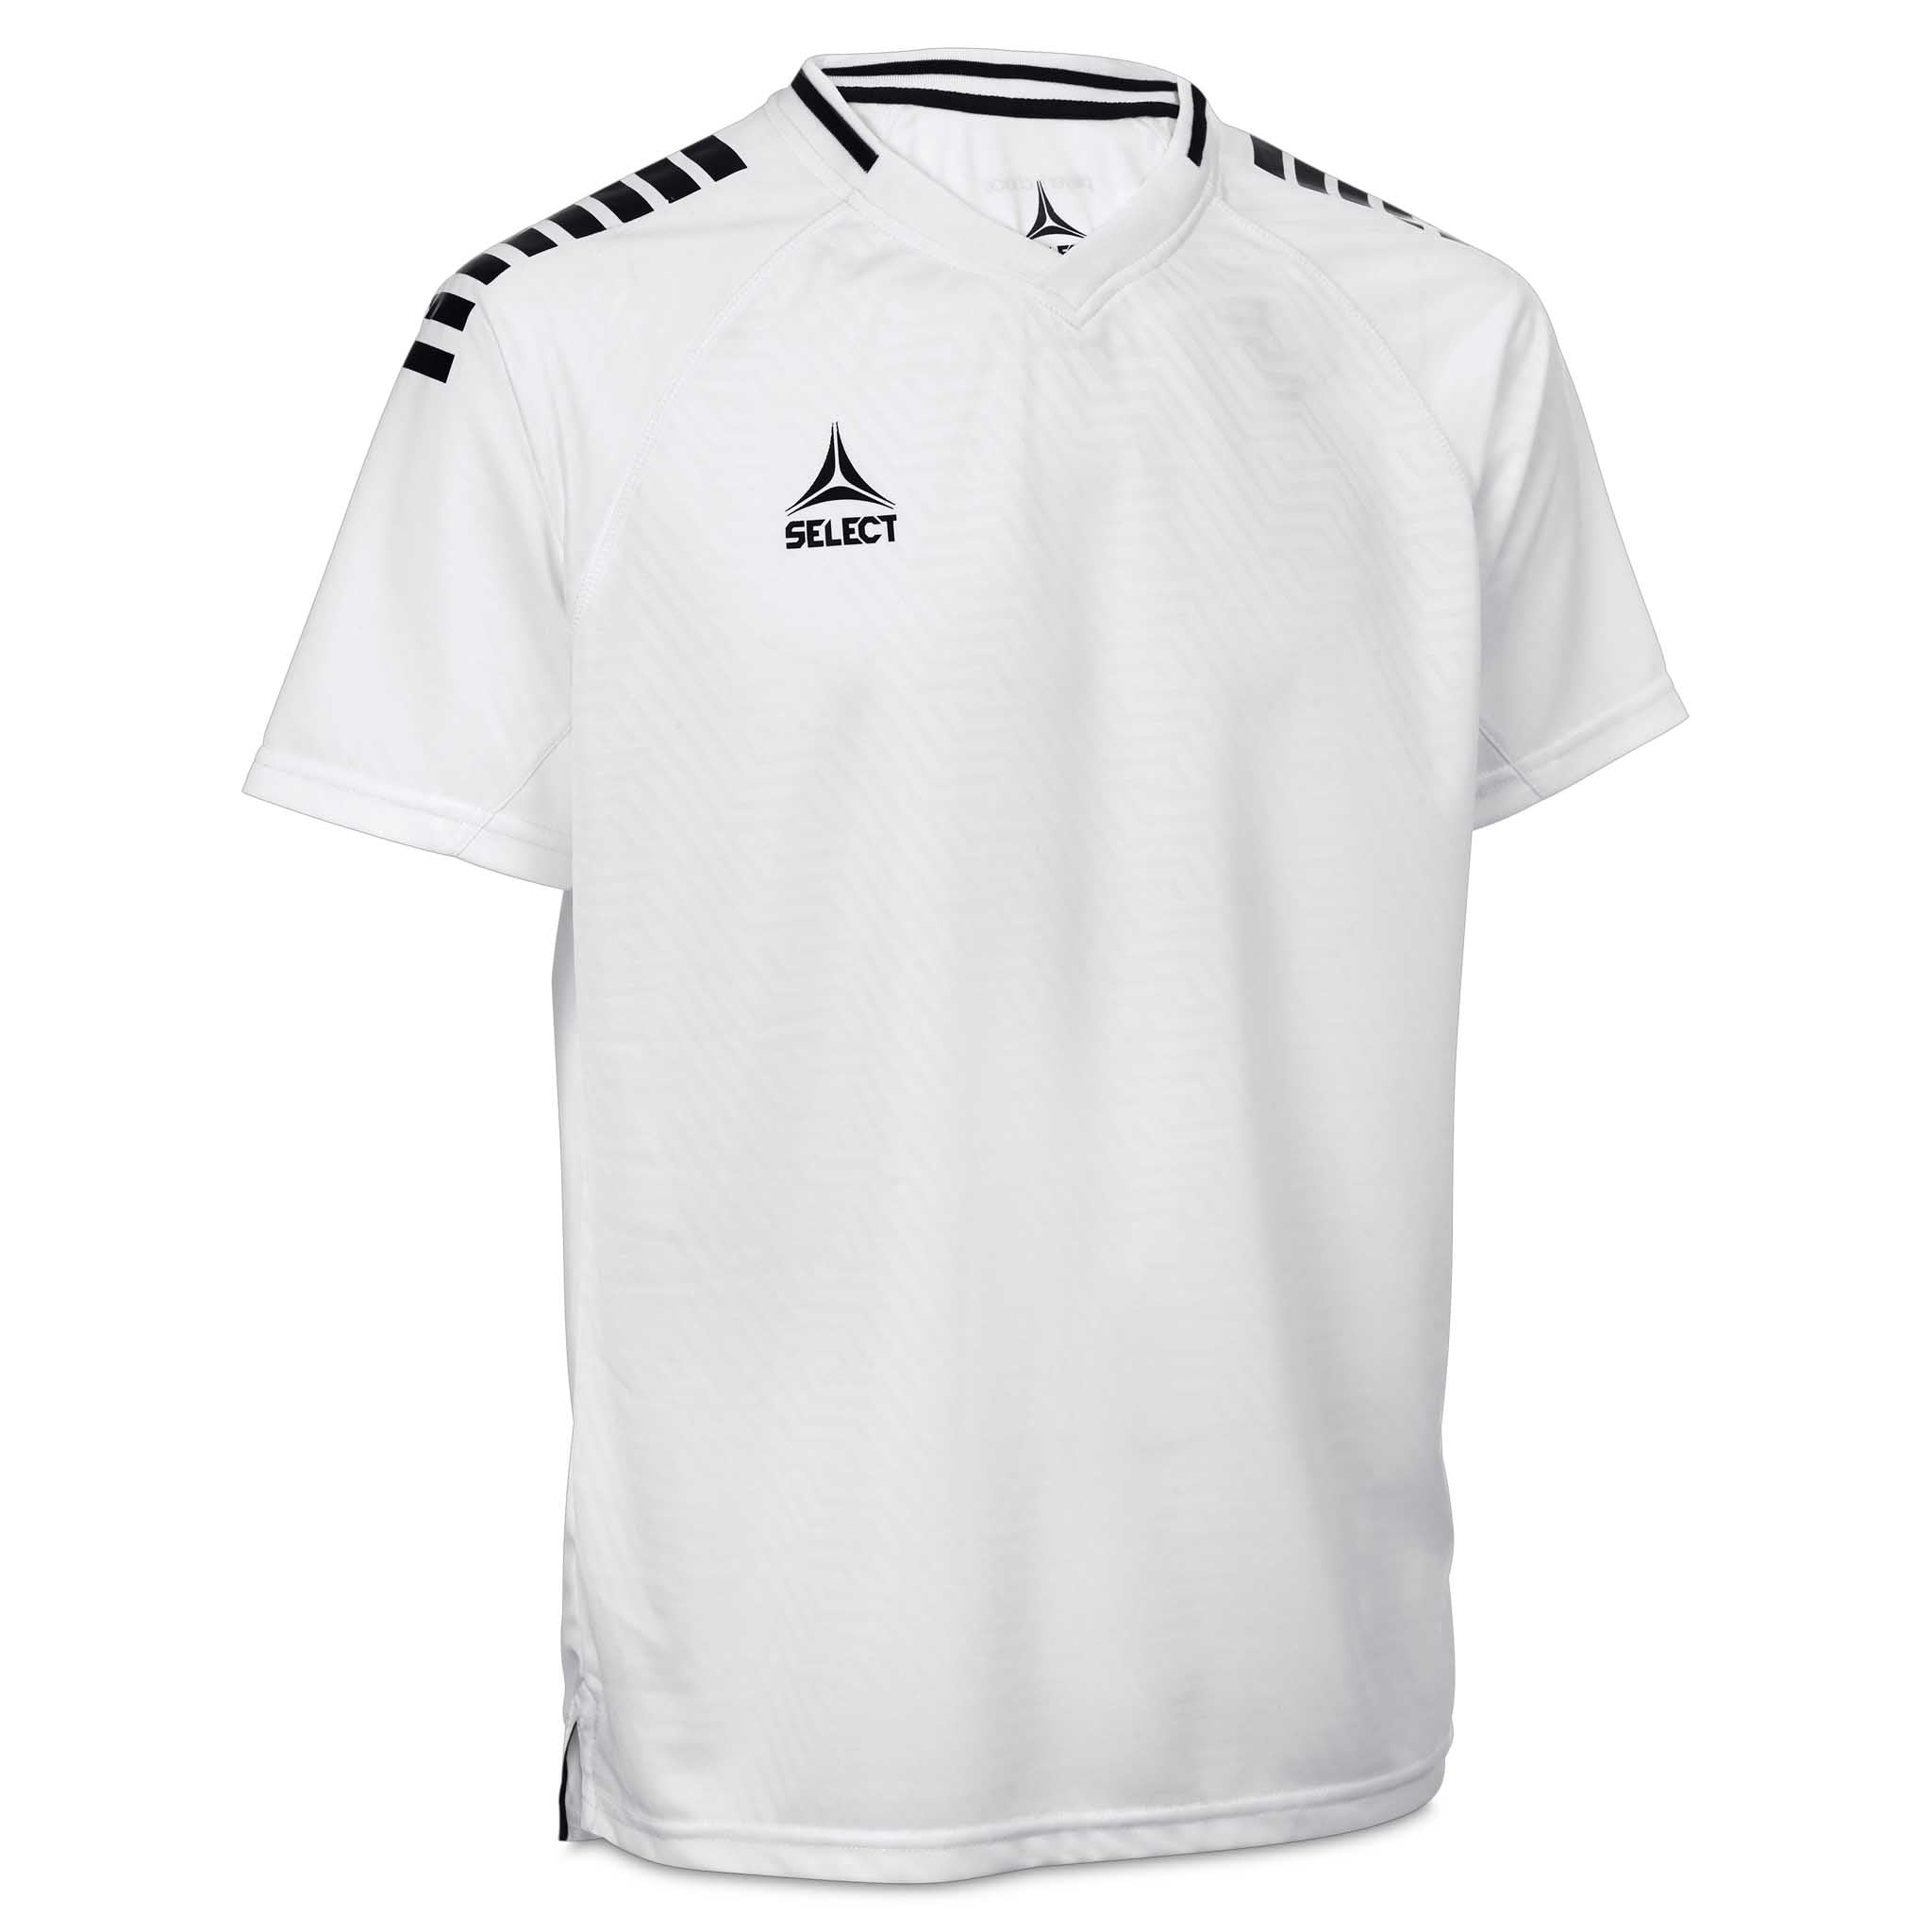 Monaco Kortärmad Spelartröja #färg_vit/svart